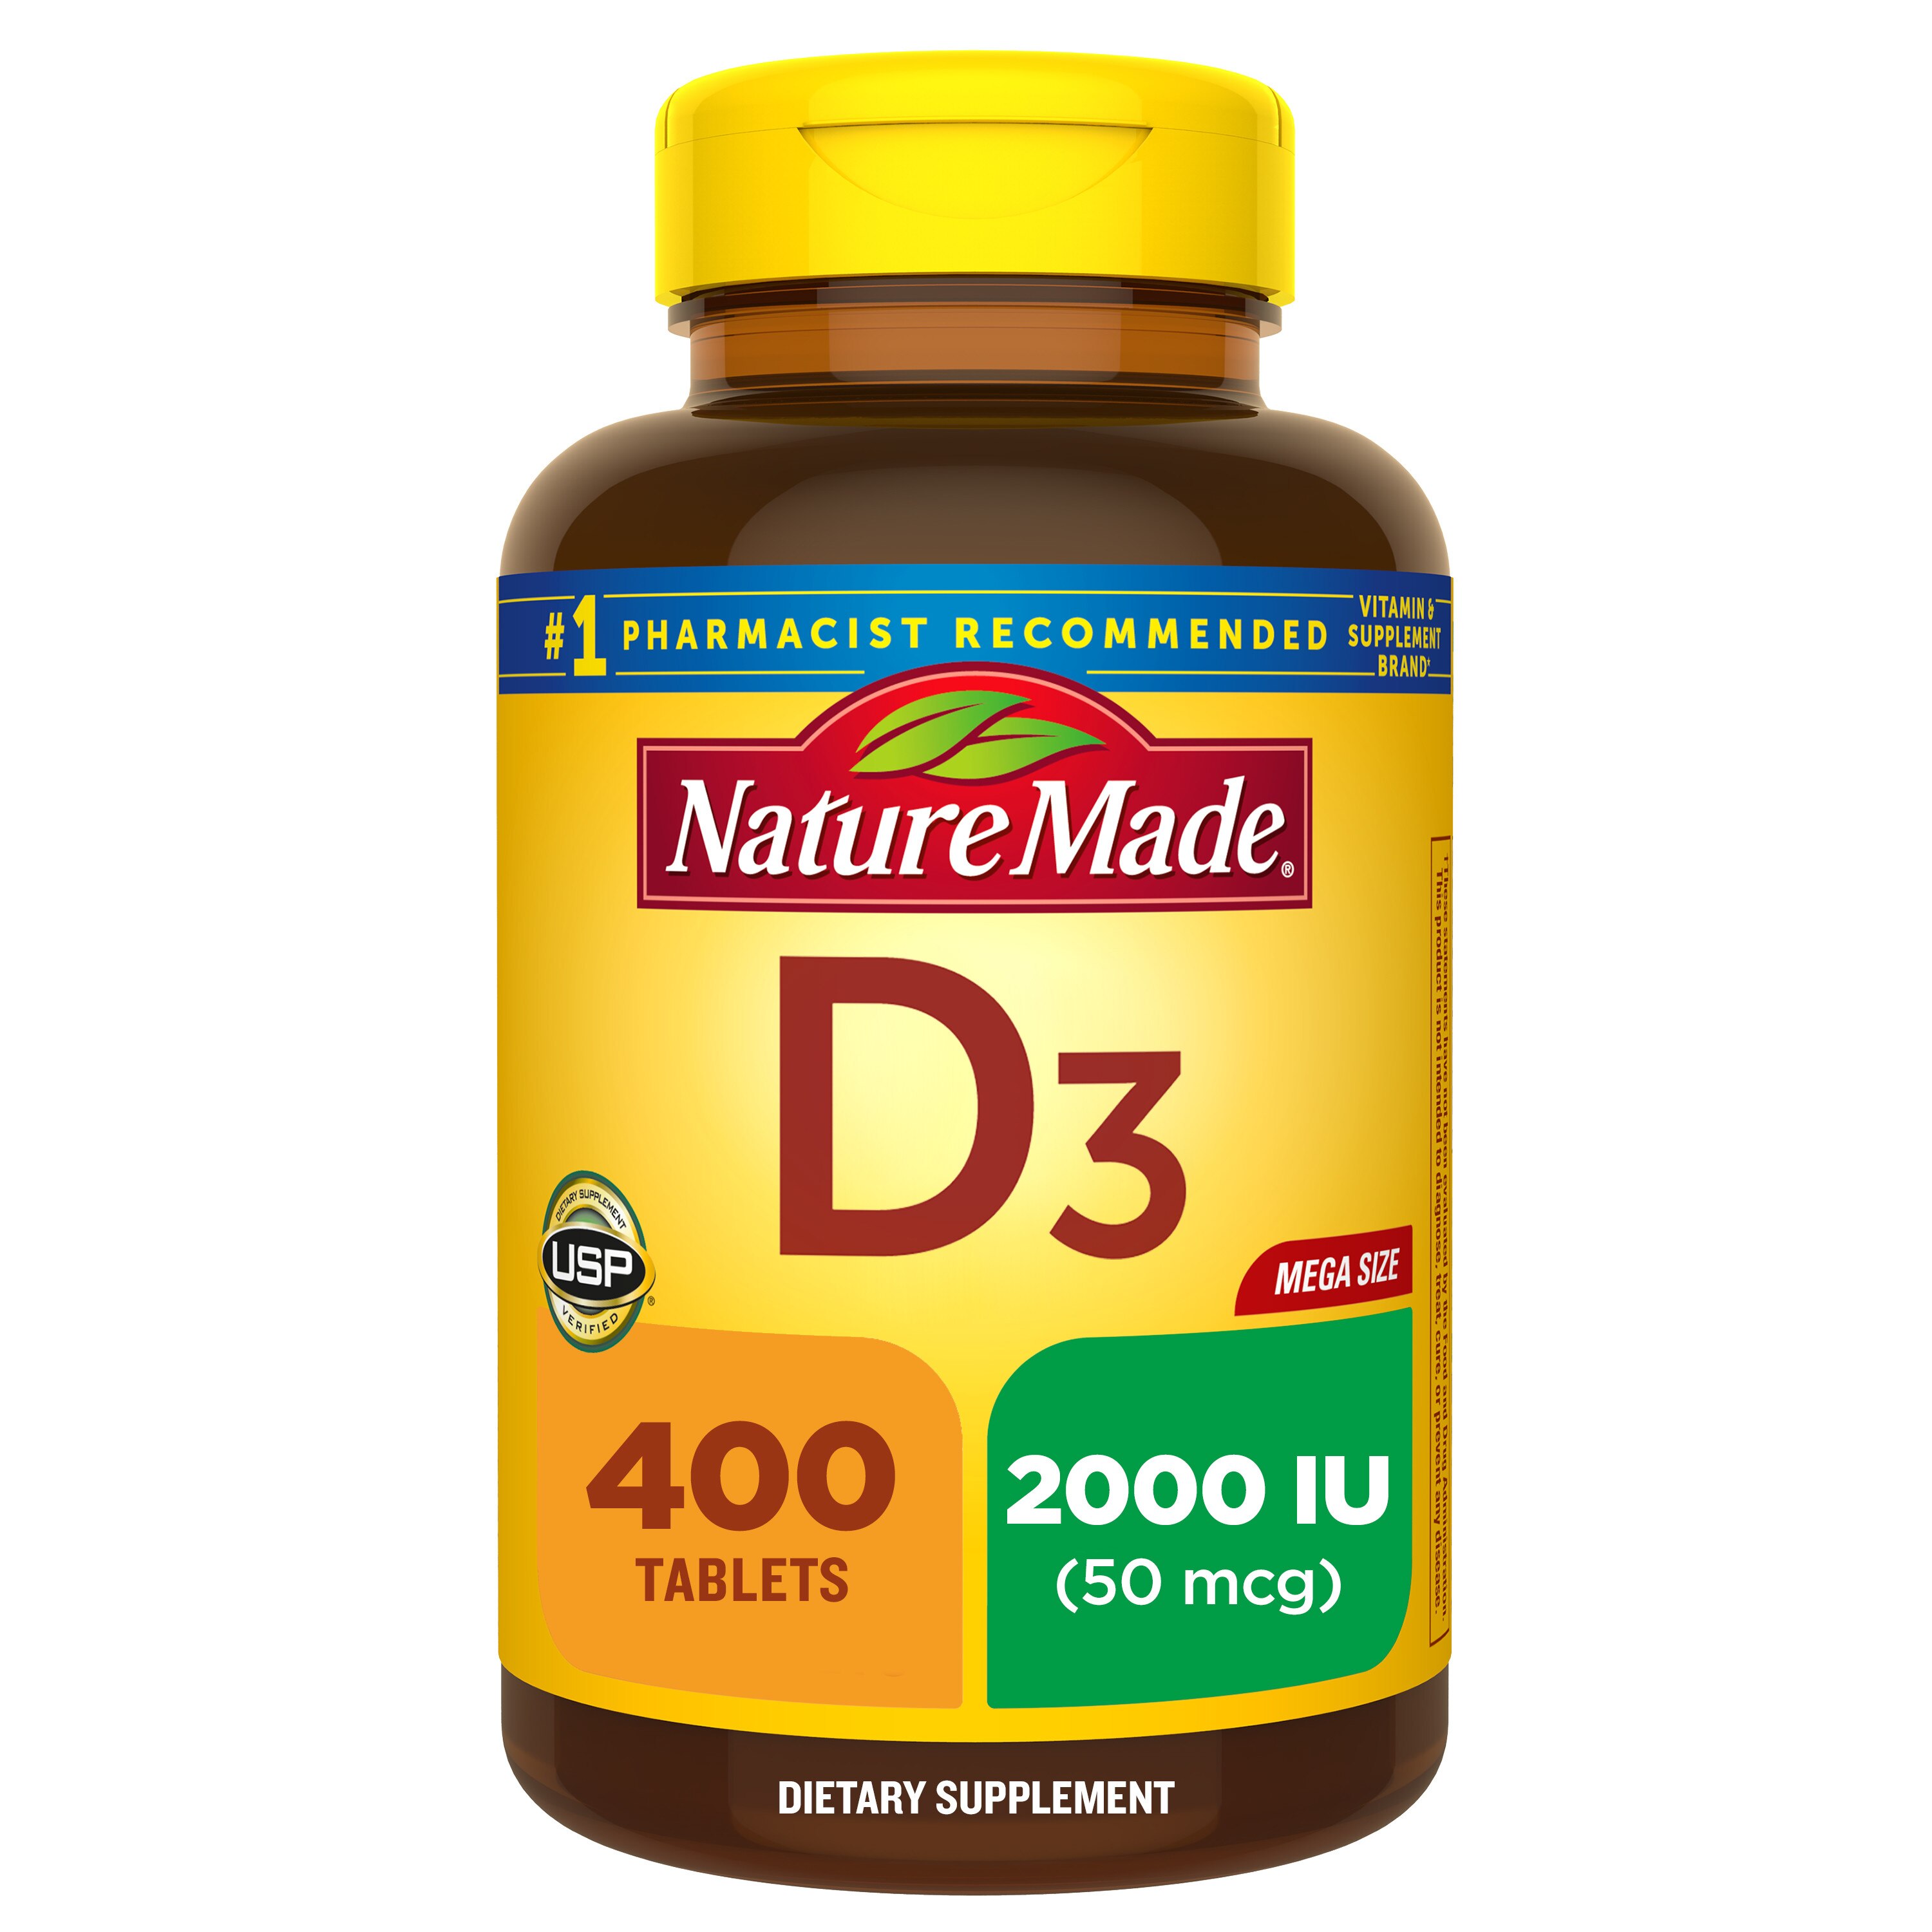 Nature Made Vitamin D3 2000 IU Tablets, 400 CT